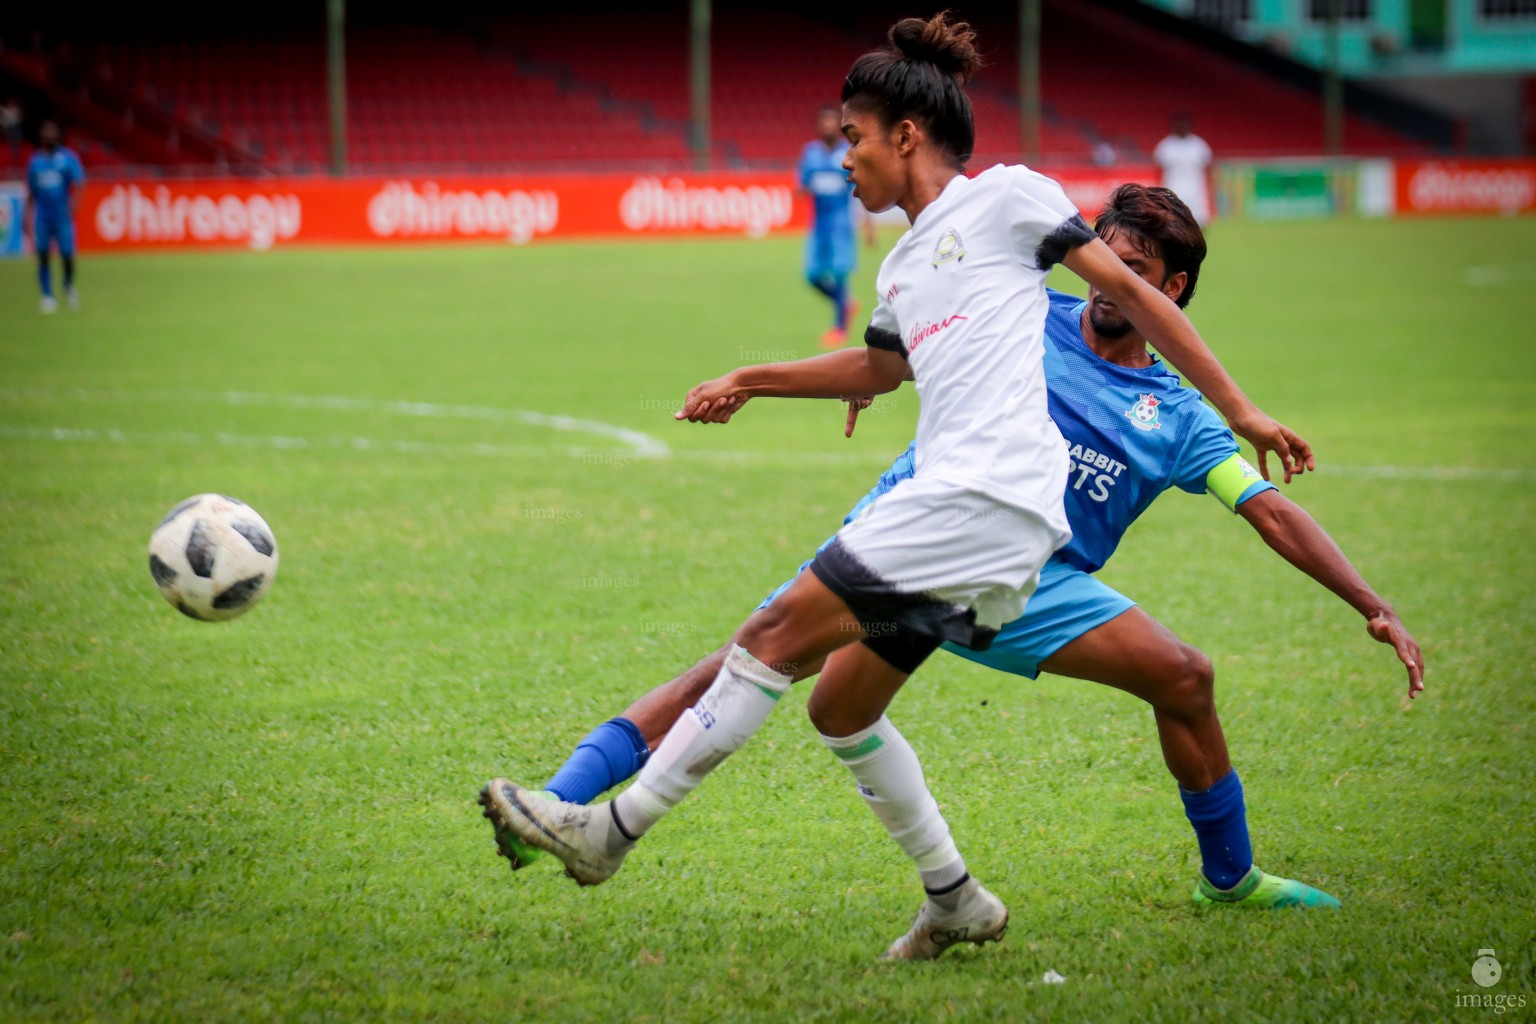 Dhiraagu Dhivehi Premier League 2018 (Nilnadhoo vs Club Green Streets)